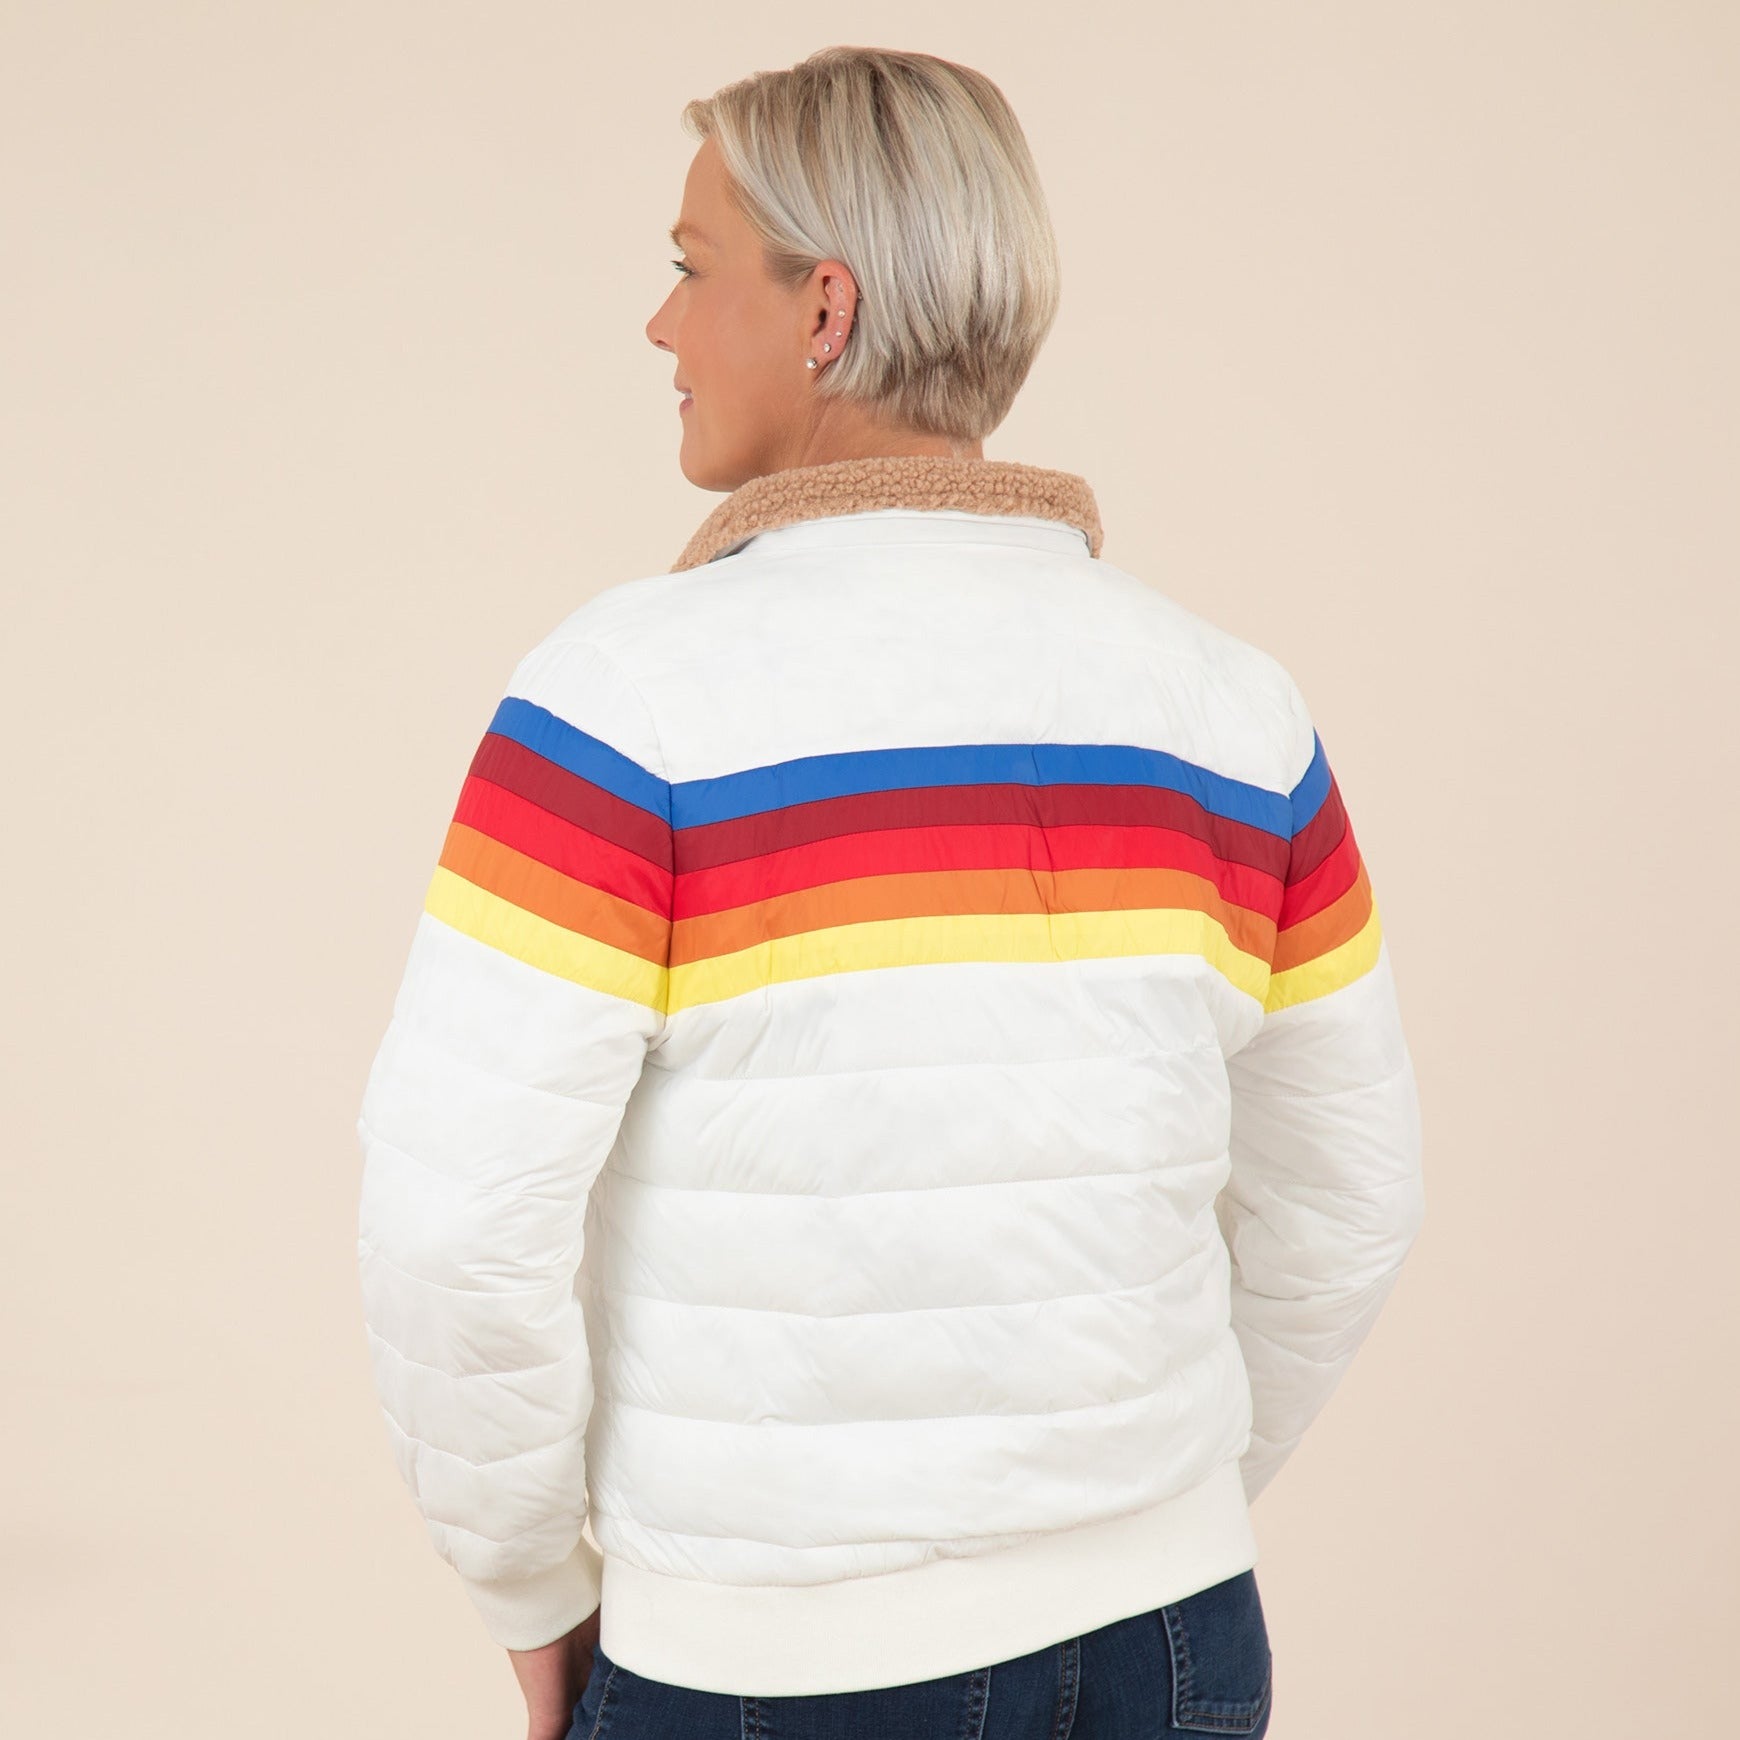 Chasing Rainbows Retro Stripe Insulated Jacket - White - M